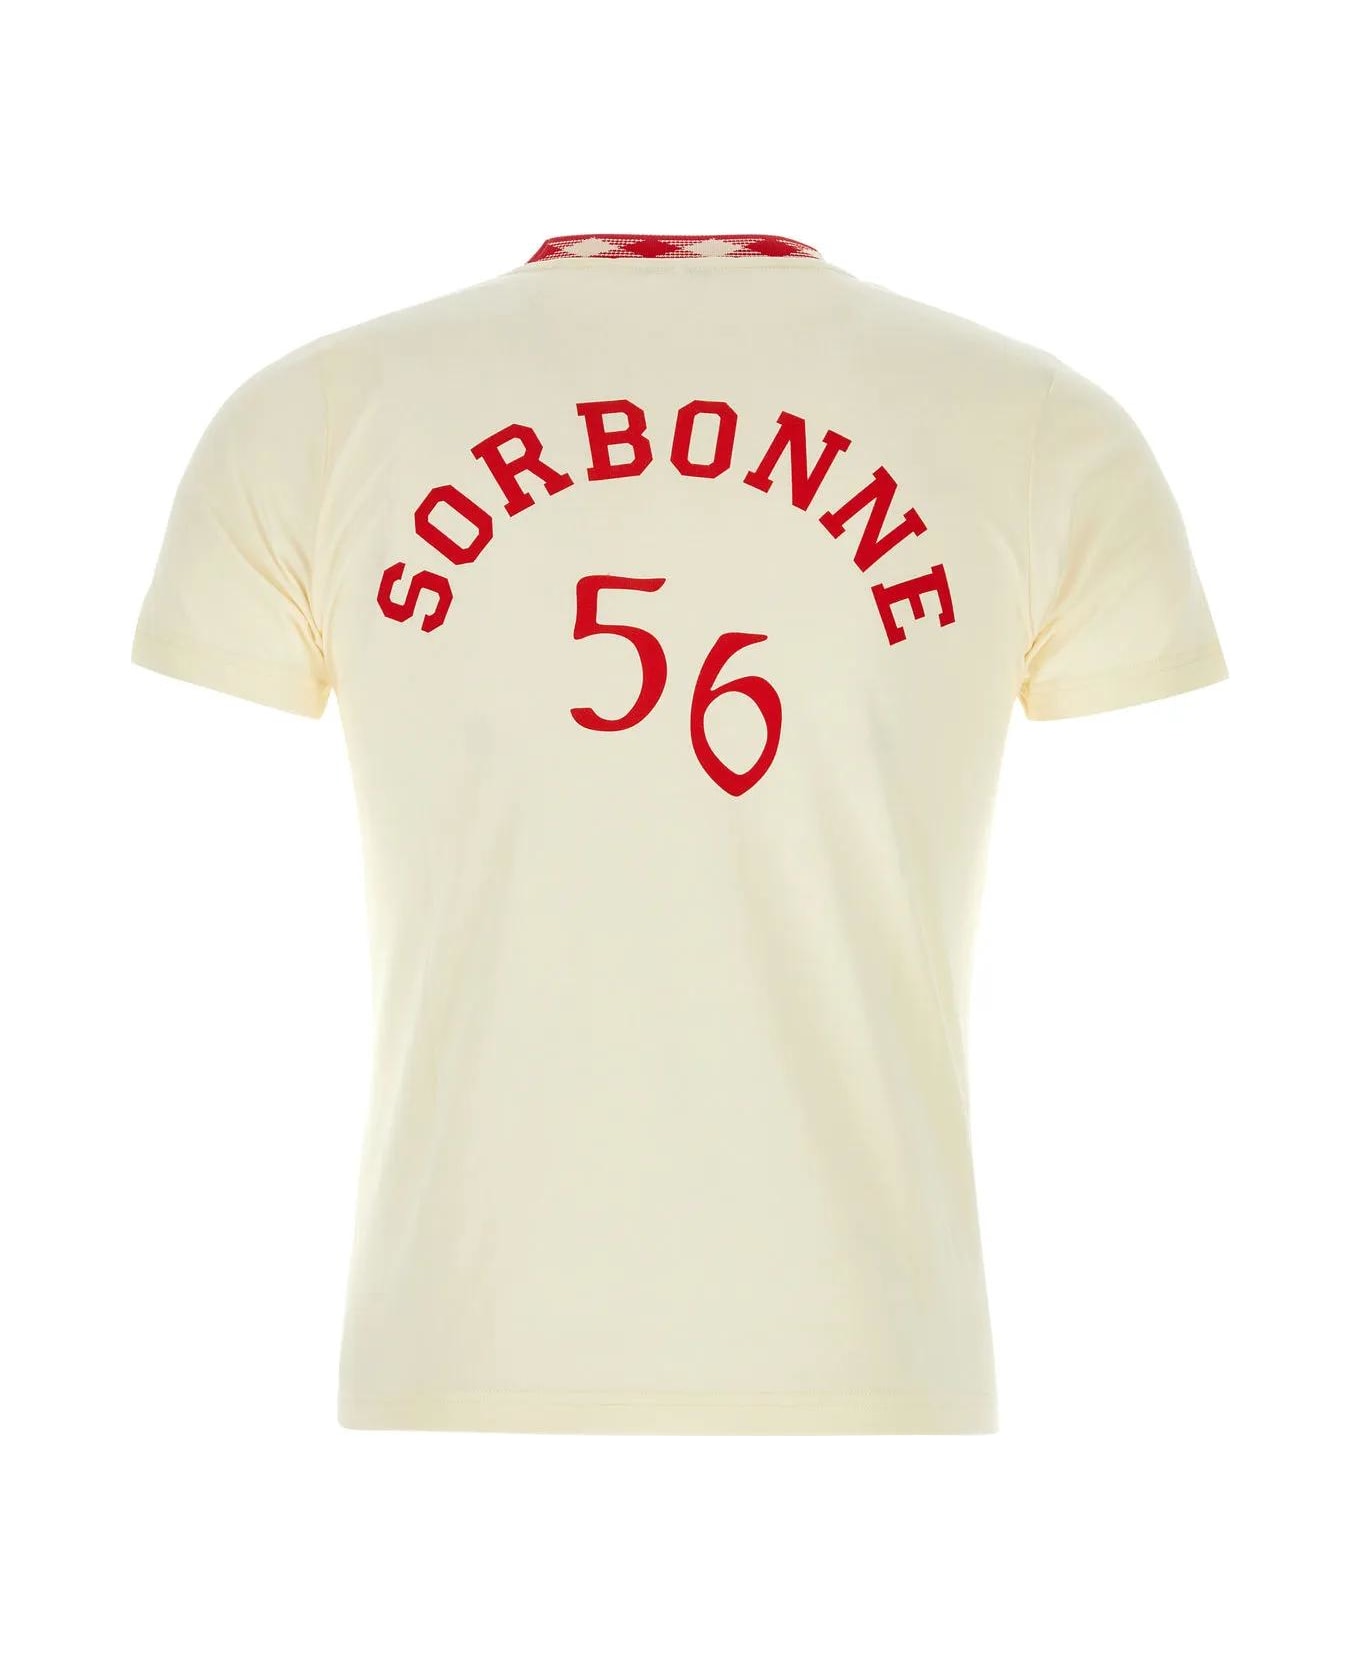 Wales Bonner Ivory Cotton Sorbonne 56 T-shirt - Ivory